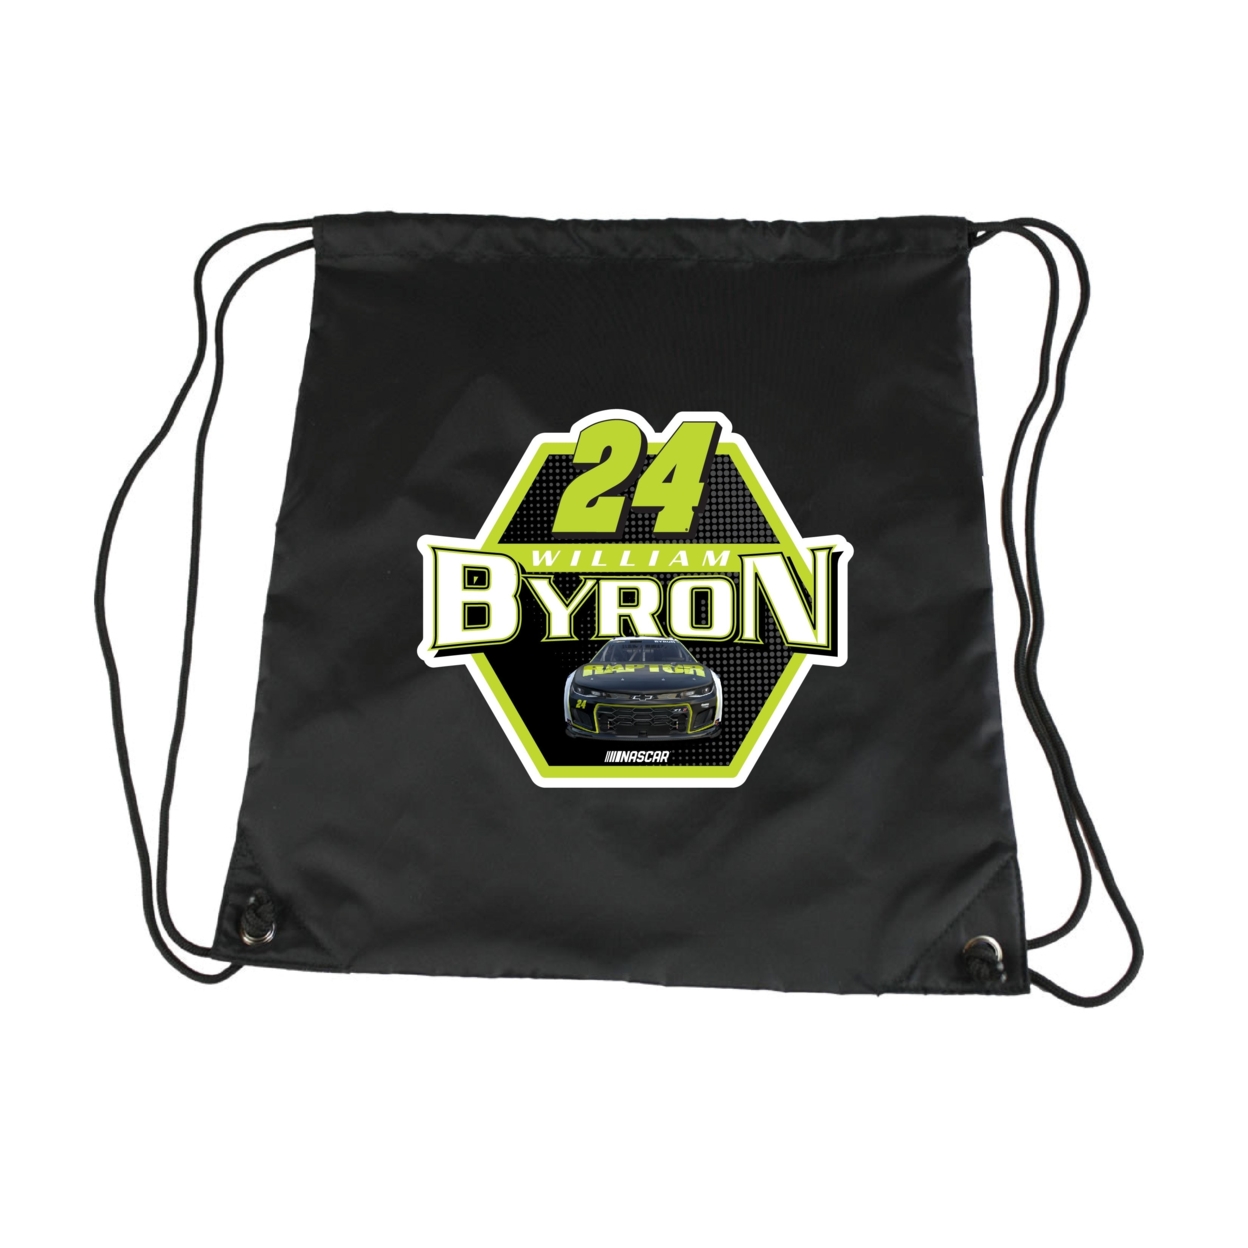 #24 William Byron Officially Licensed Cinch Bag